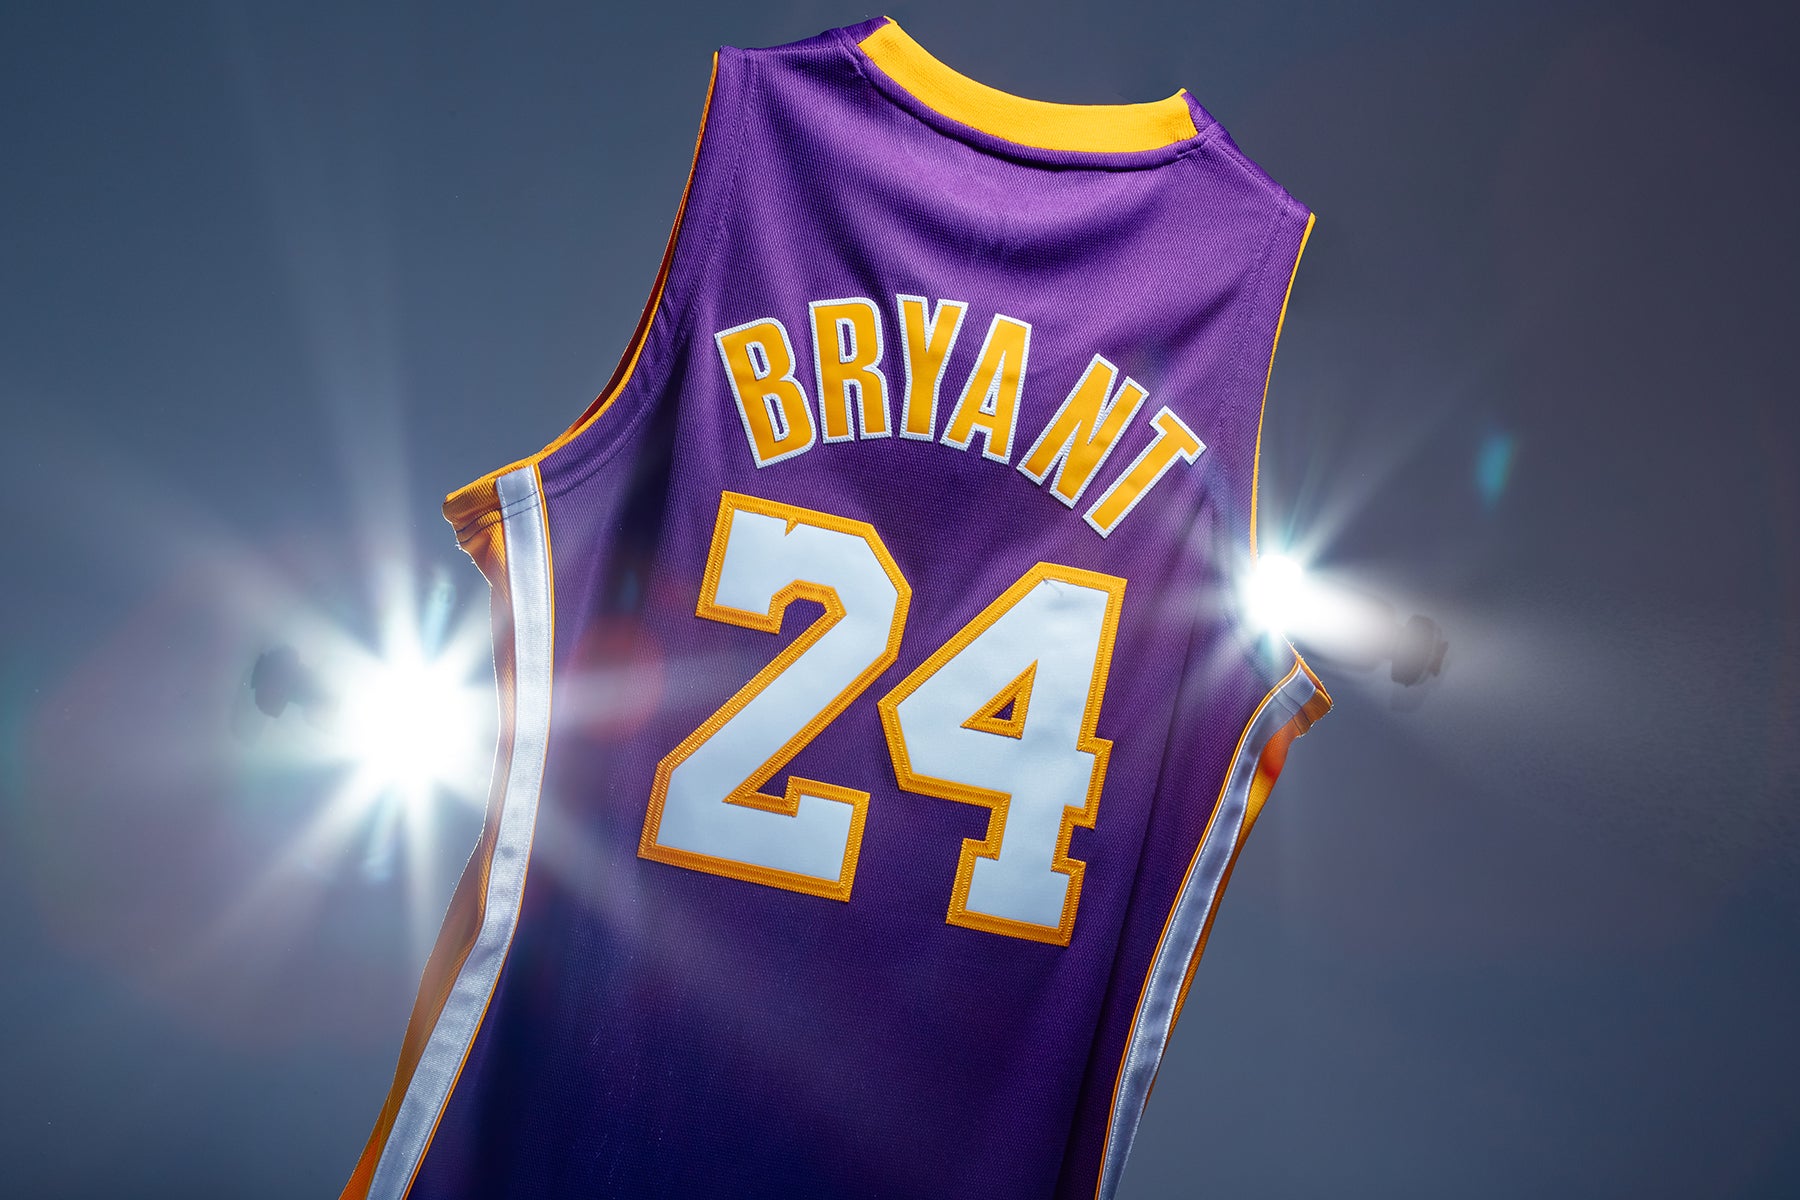 NBA Women's Los Angeles Lakers Kobe Bryant Replica Jersey